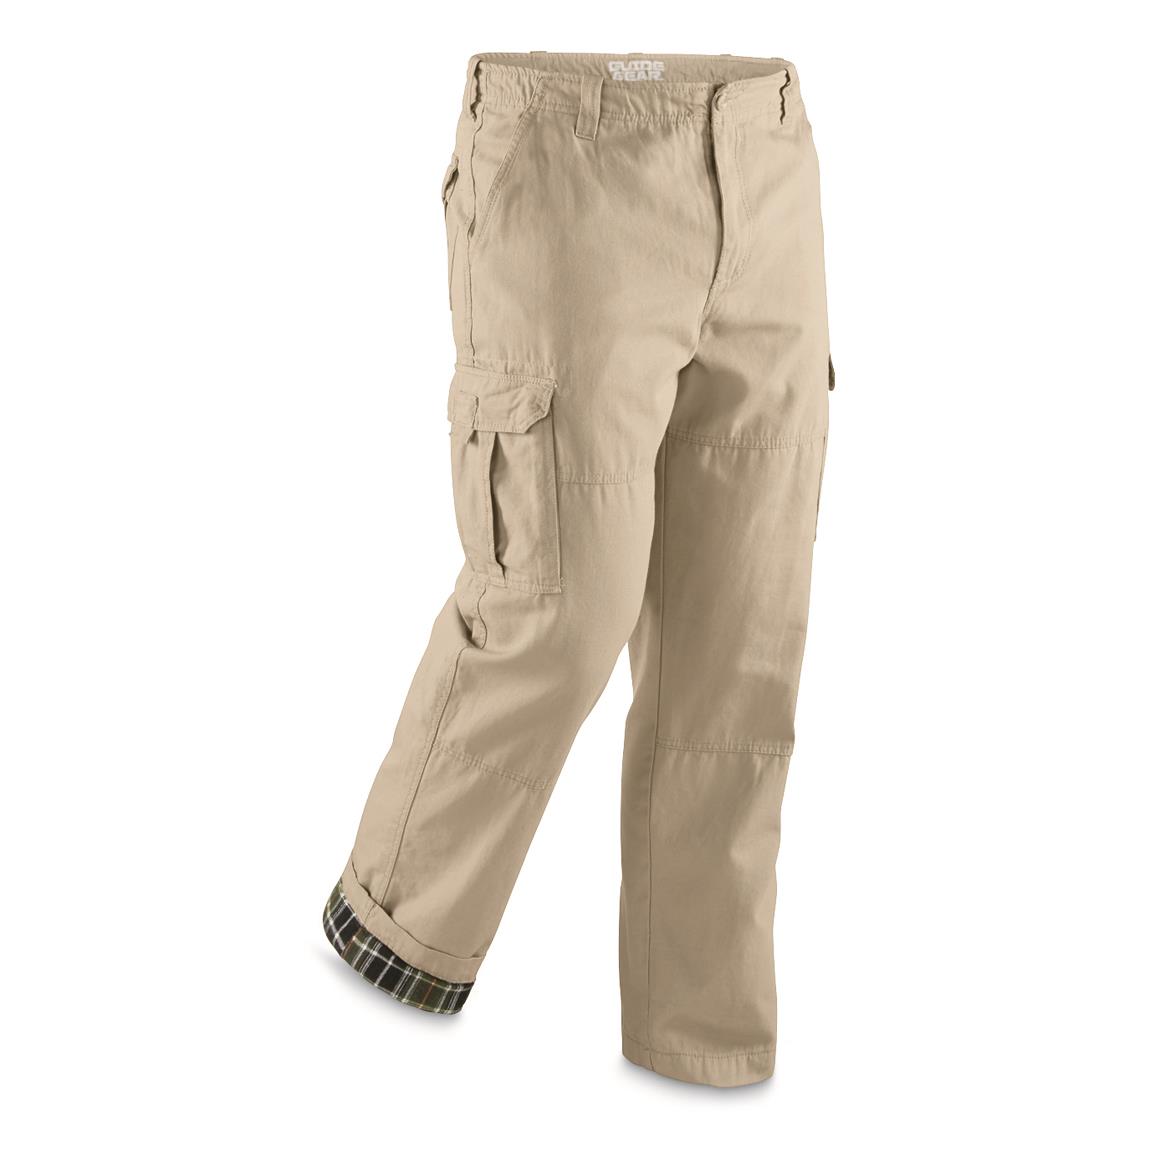 Guide Gear Men's Flannel-lined Cotton Cargo Pants, Khaki